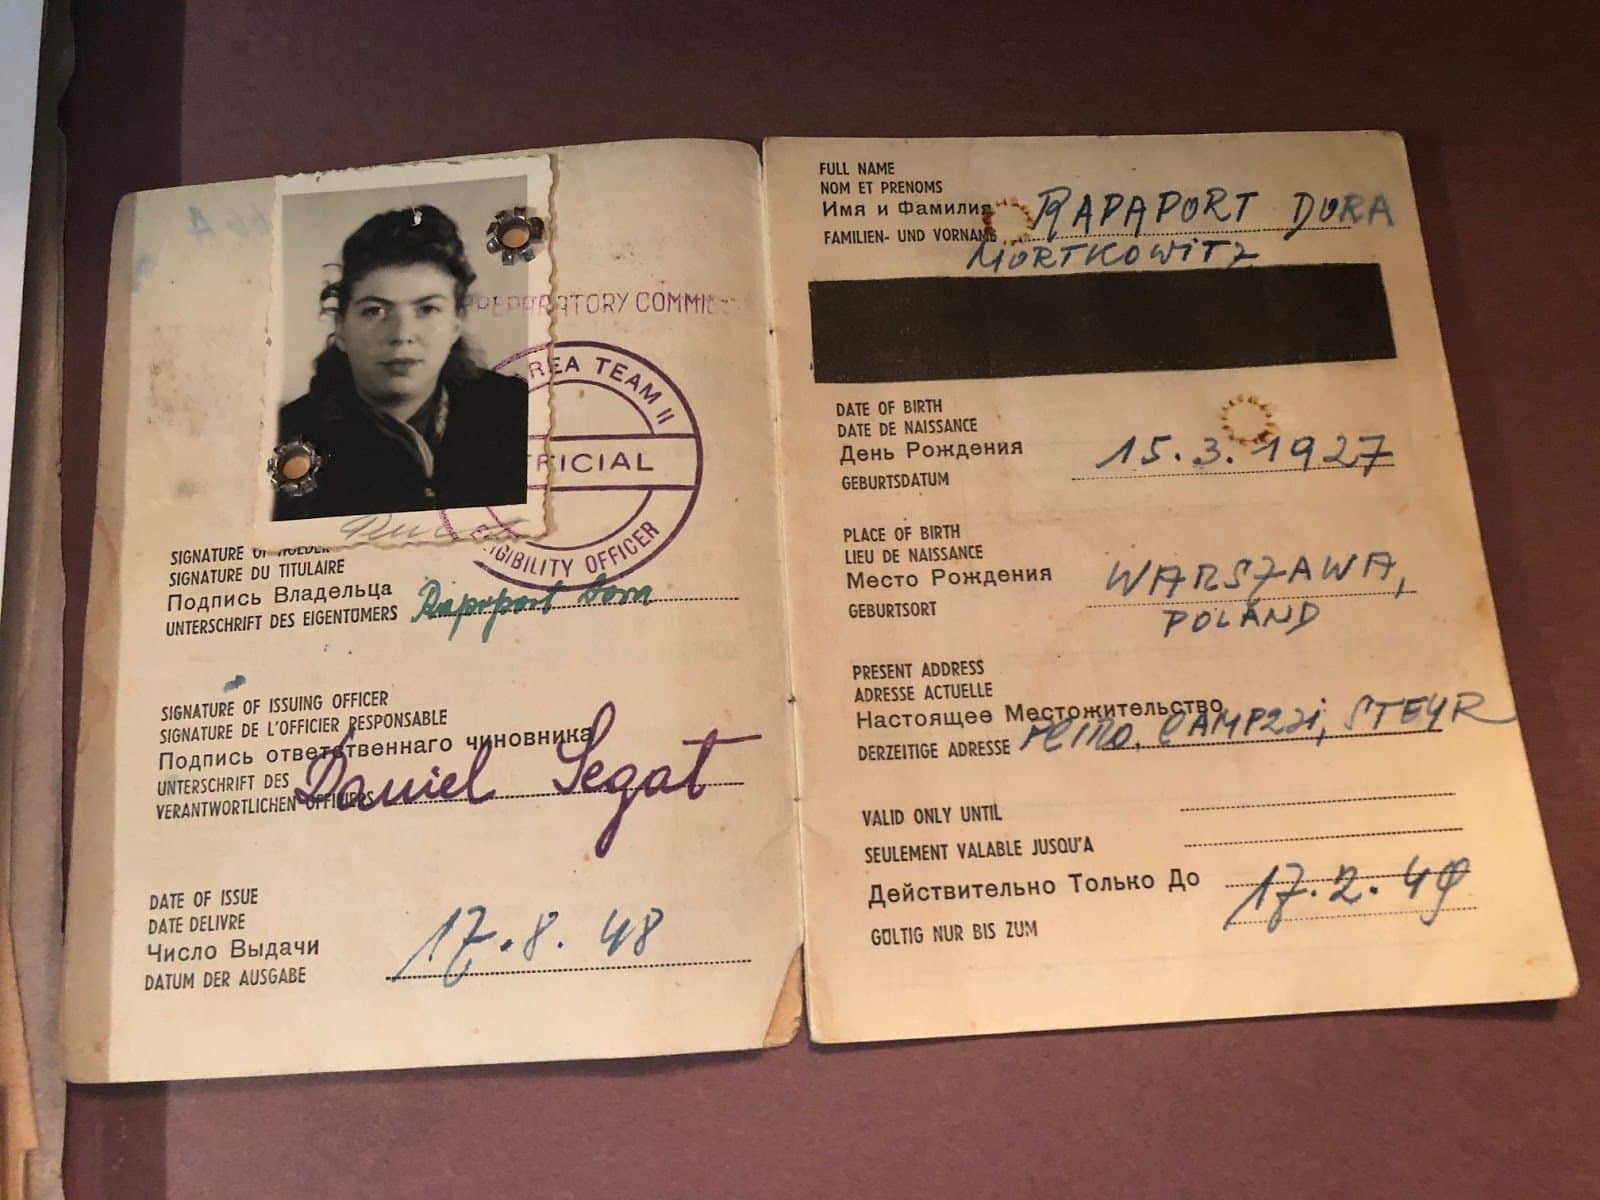 Dora’s passport, issued in 1948